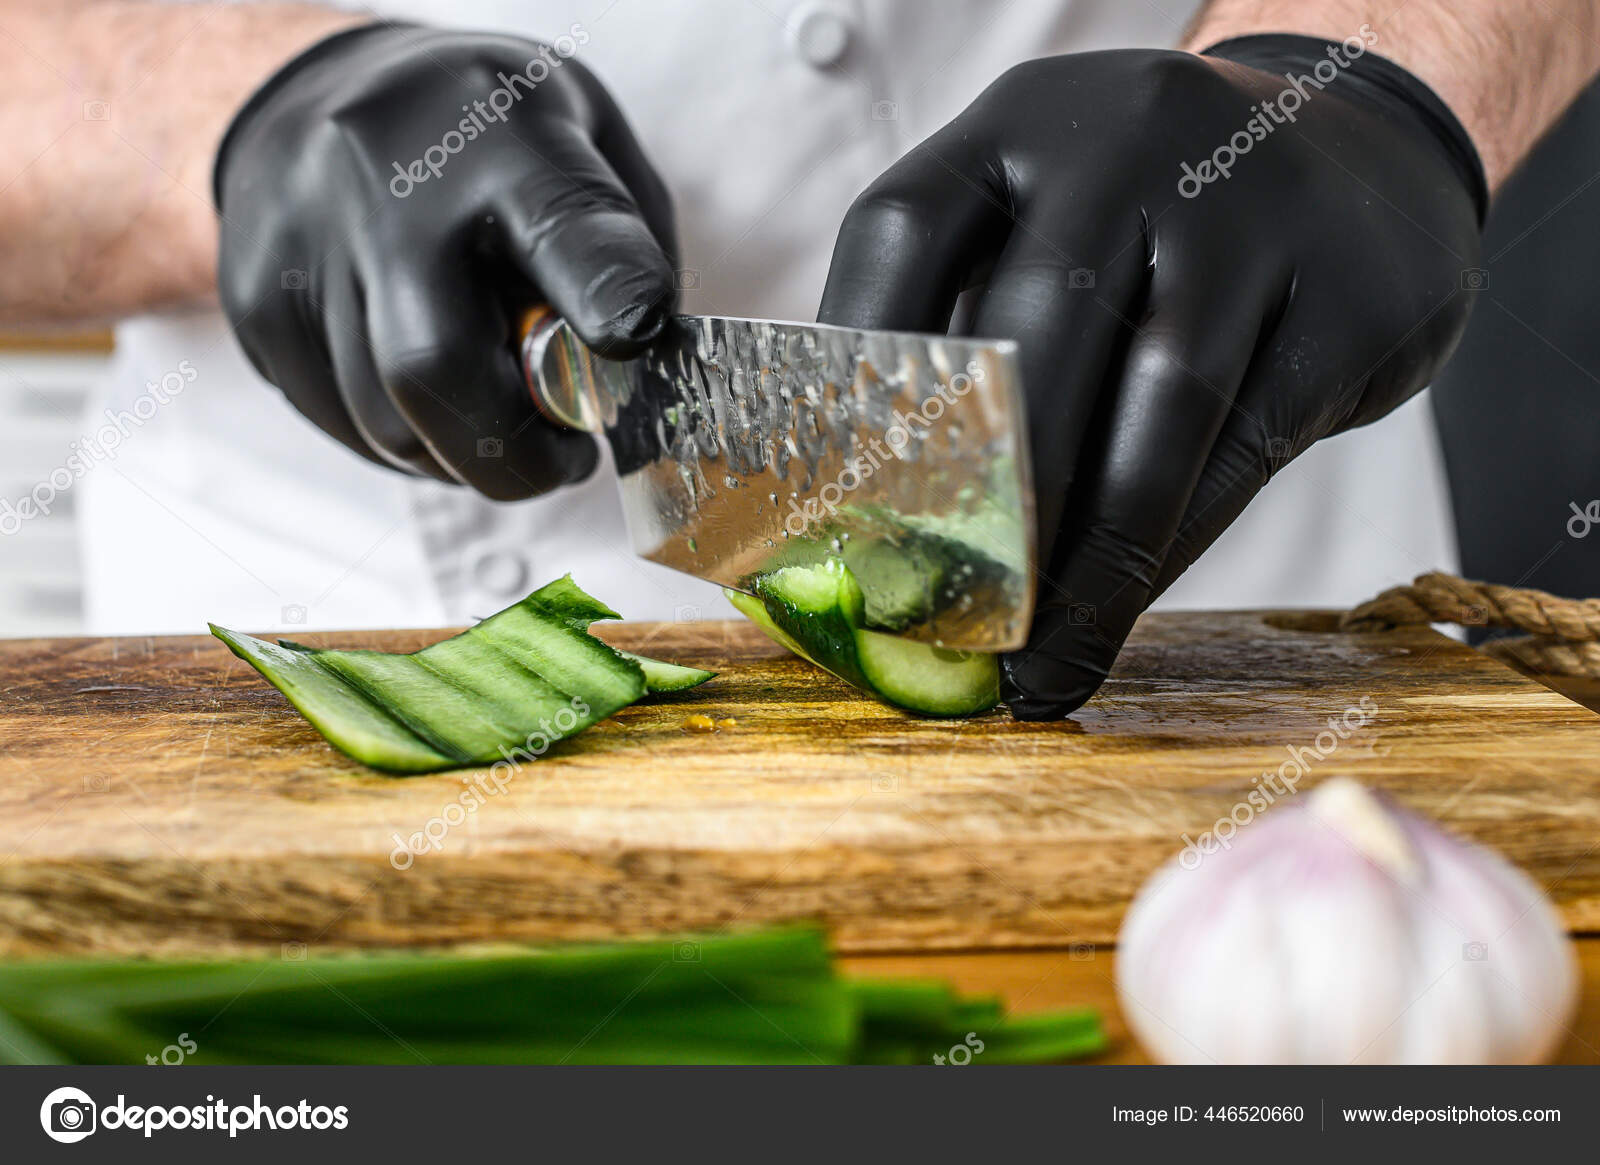 https://st2.depositphotos.com/22628872/44652/i/1600/depositphotos_446520660-stock-photo-a-chef-in-black-gloves.jpg